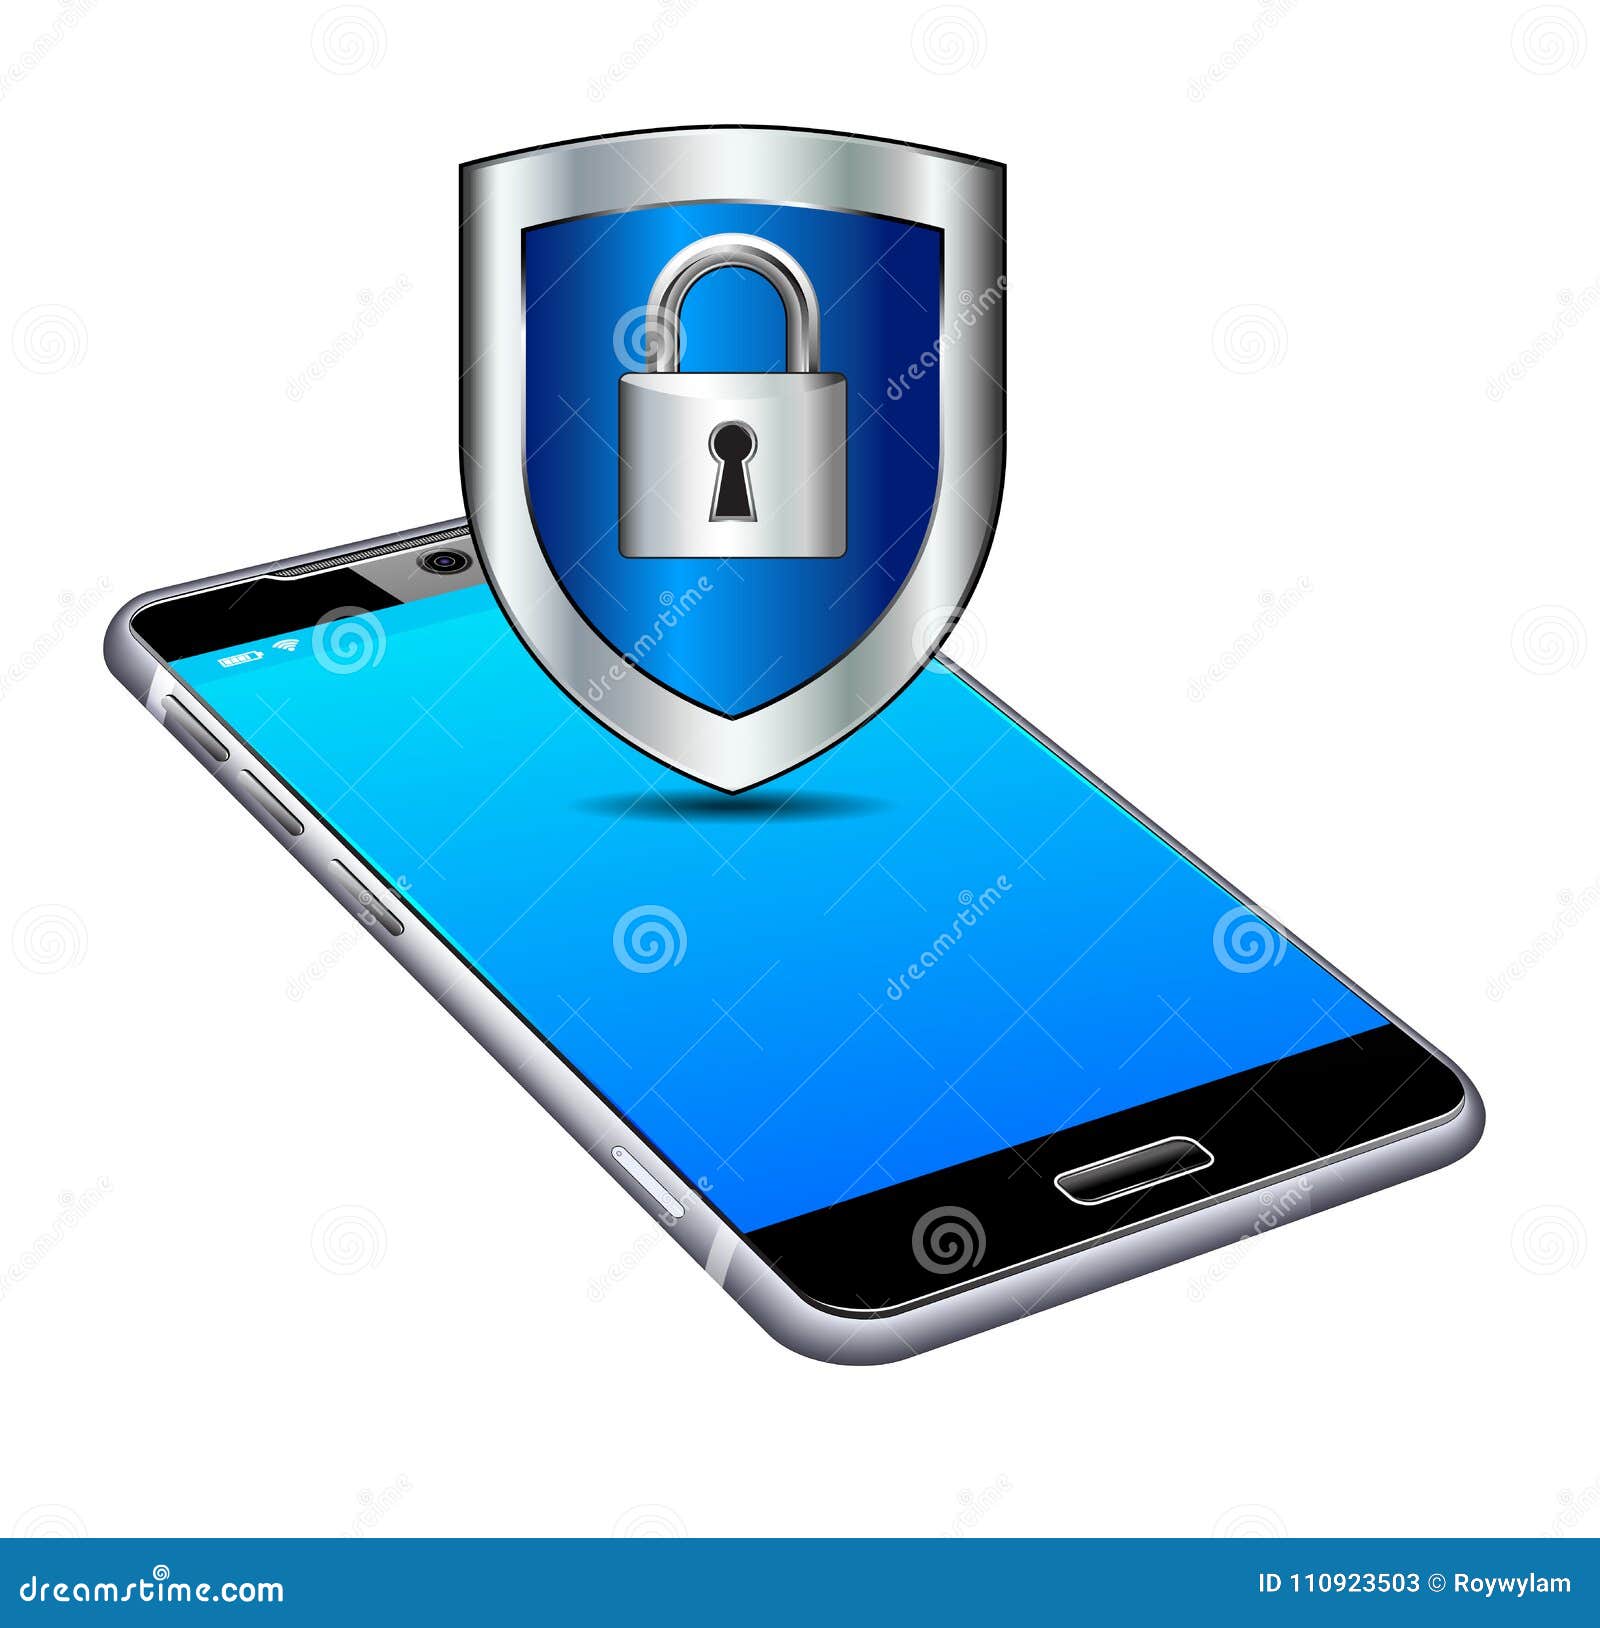 phone lock unlock secure cell, smart, mobile, cellphone